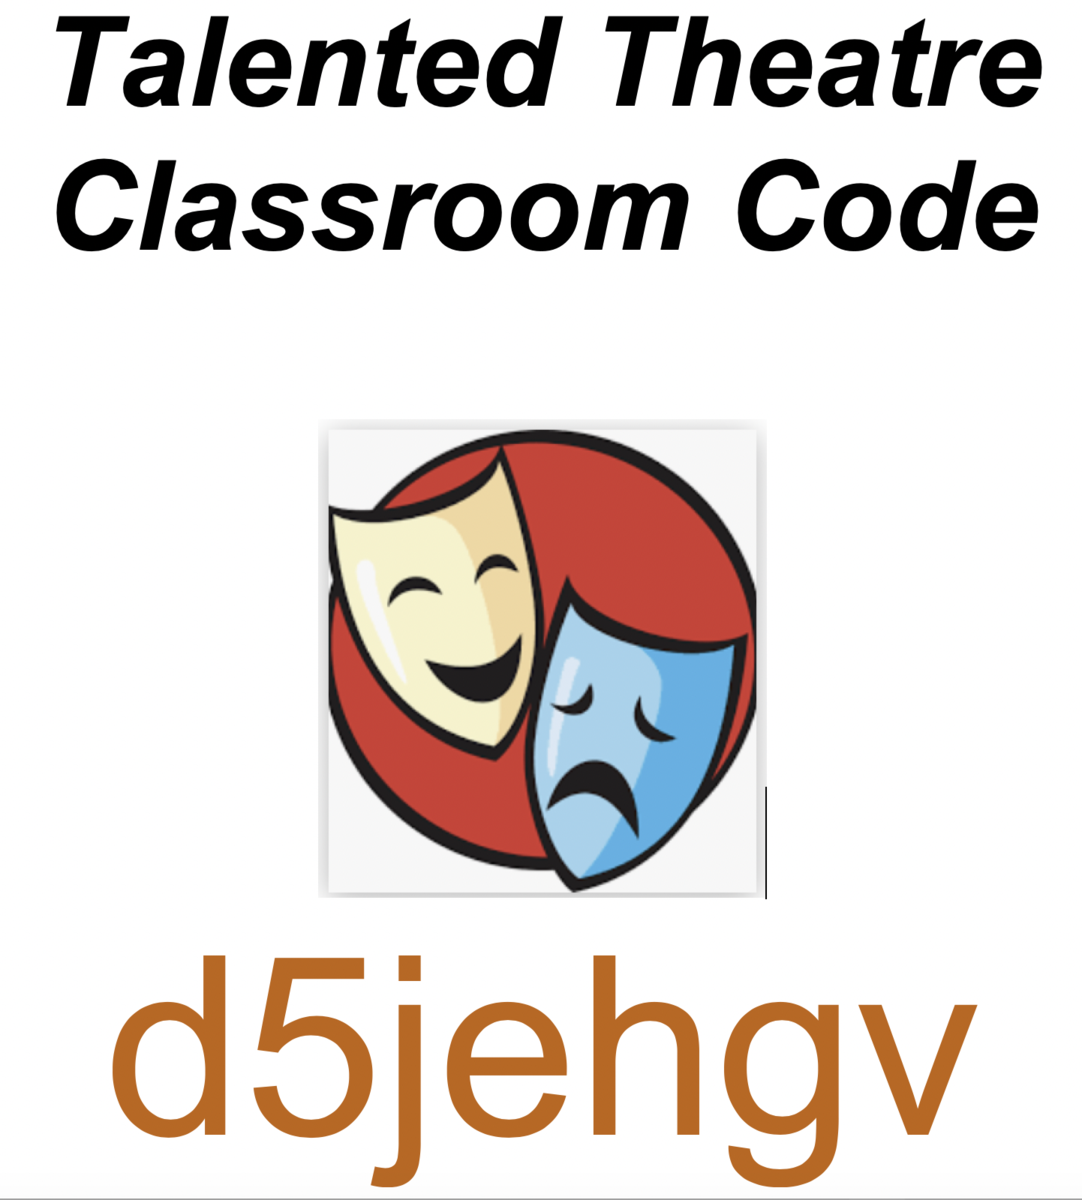 Talented Classroom Theatre